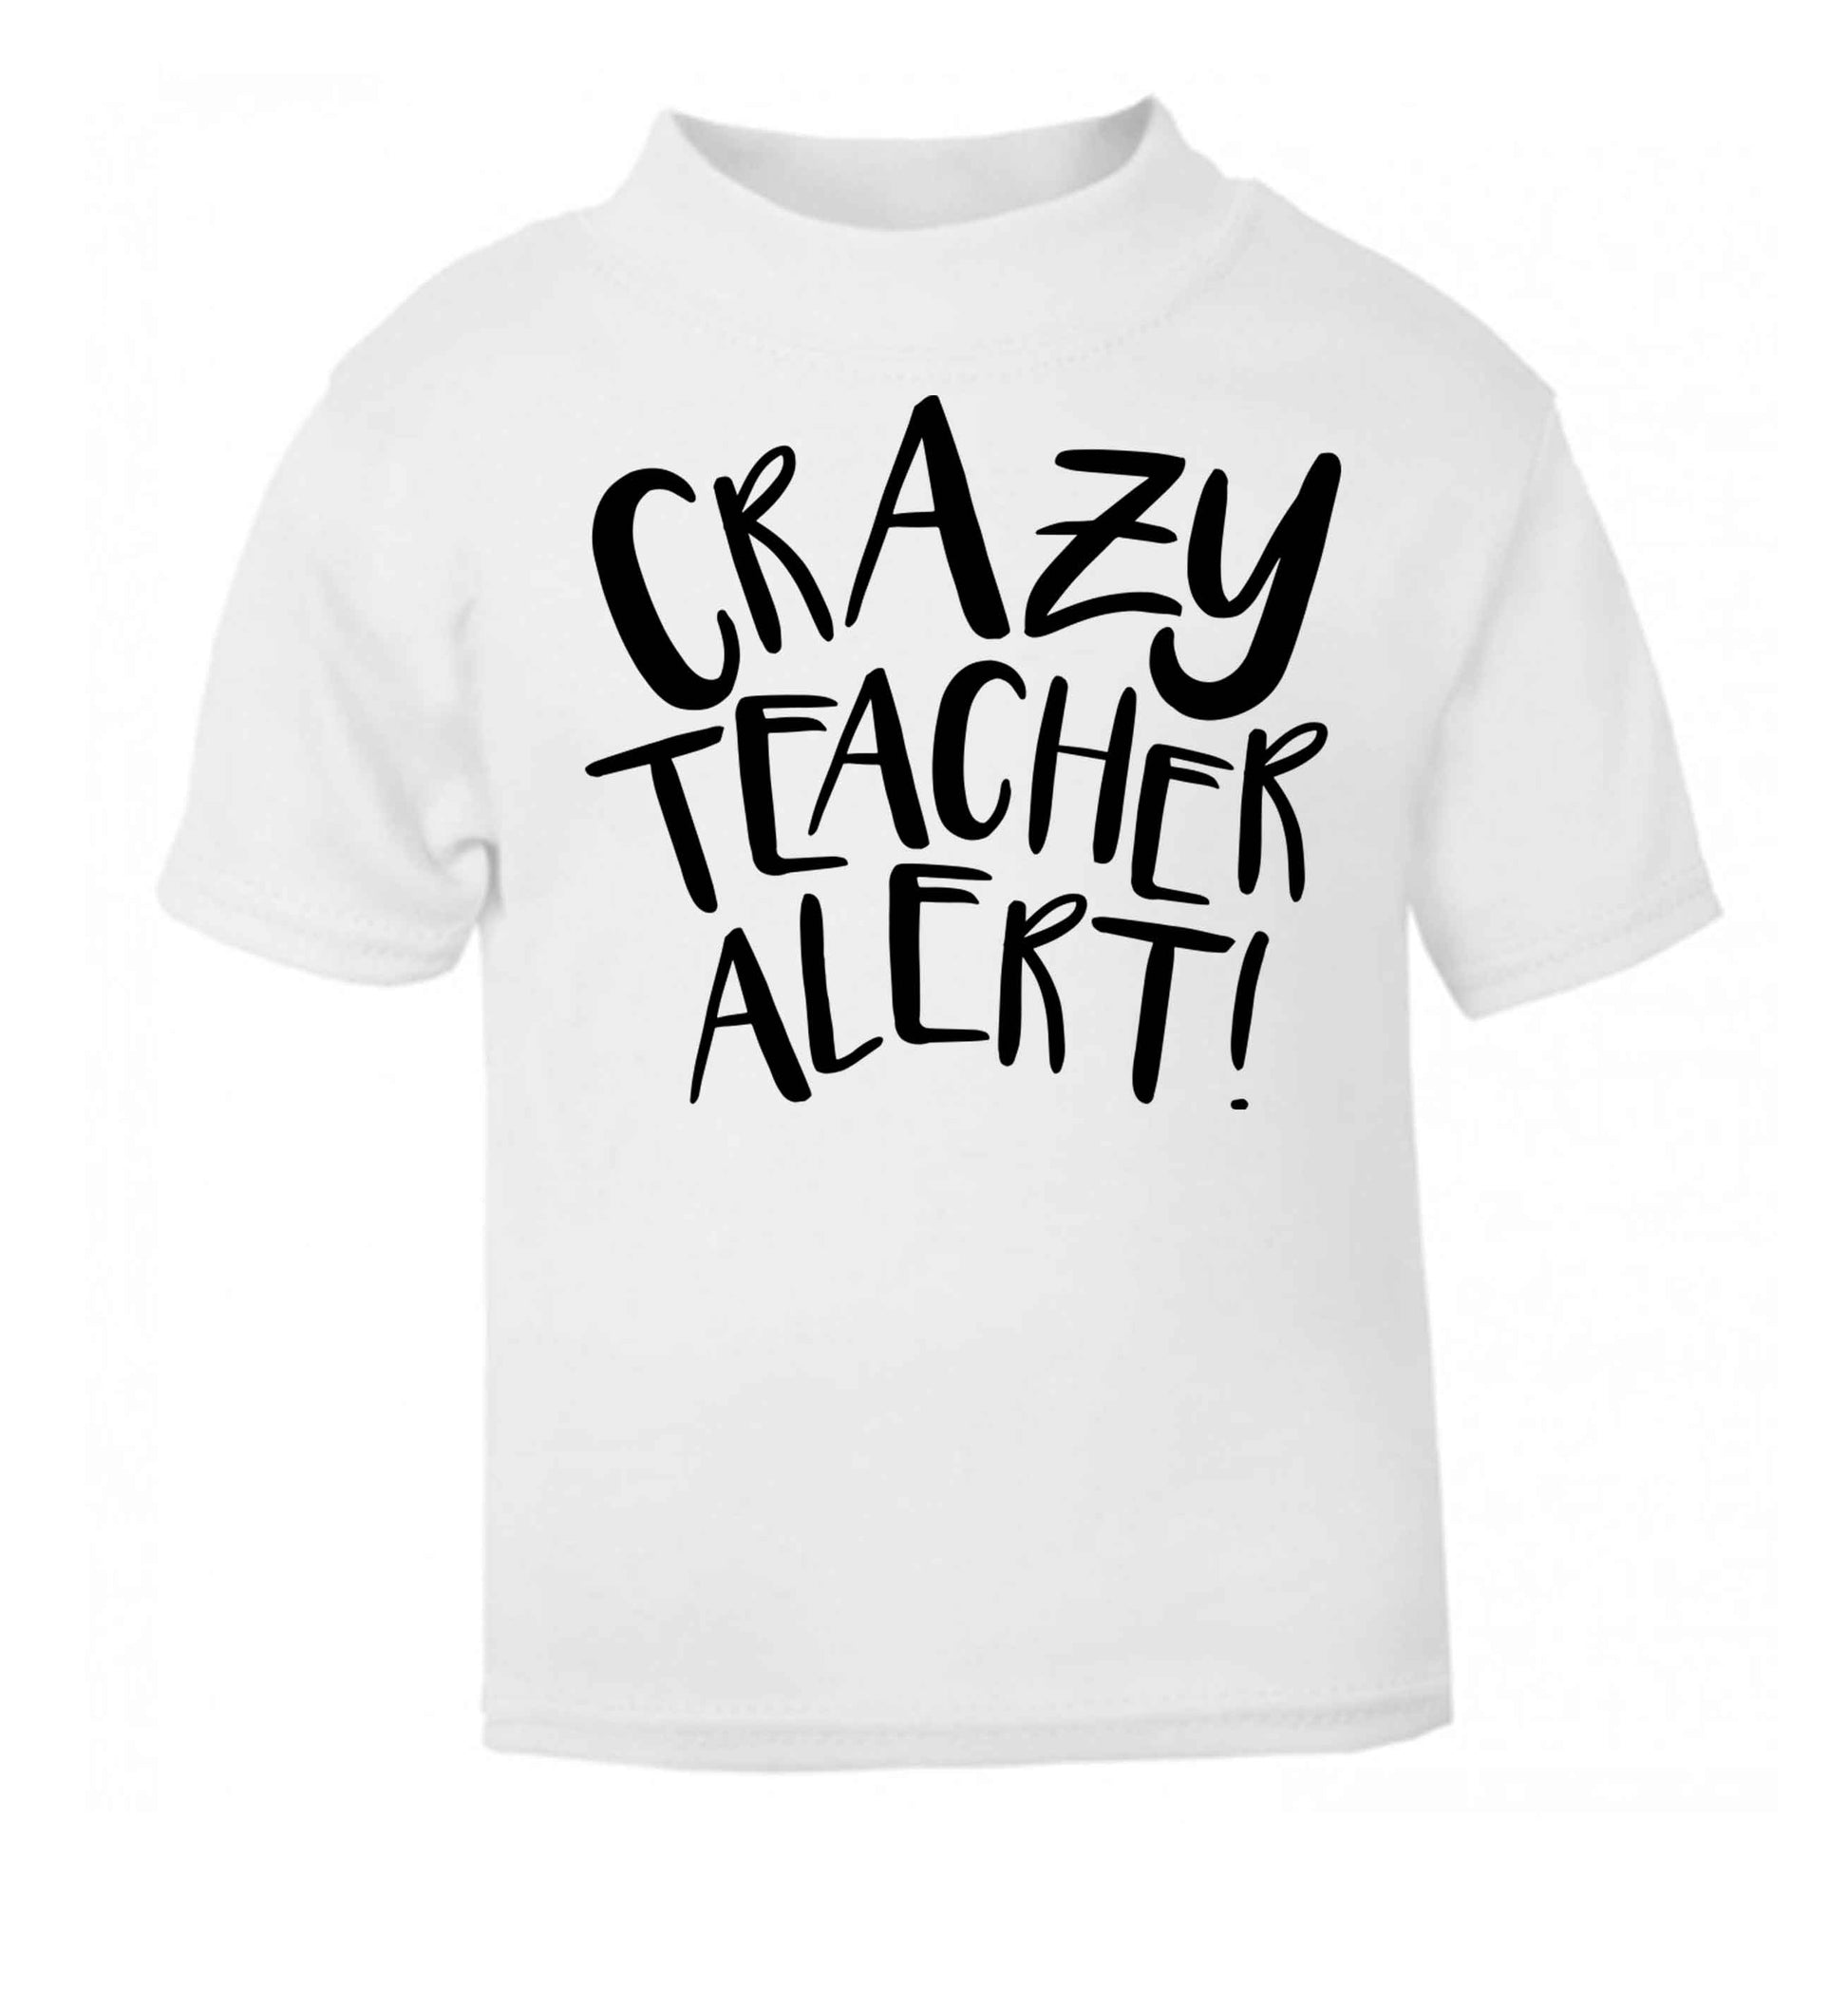 Crazy teacher alert white baby toddler Tshirt 2 Years